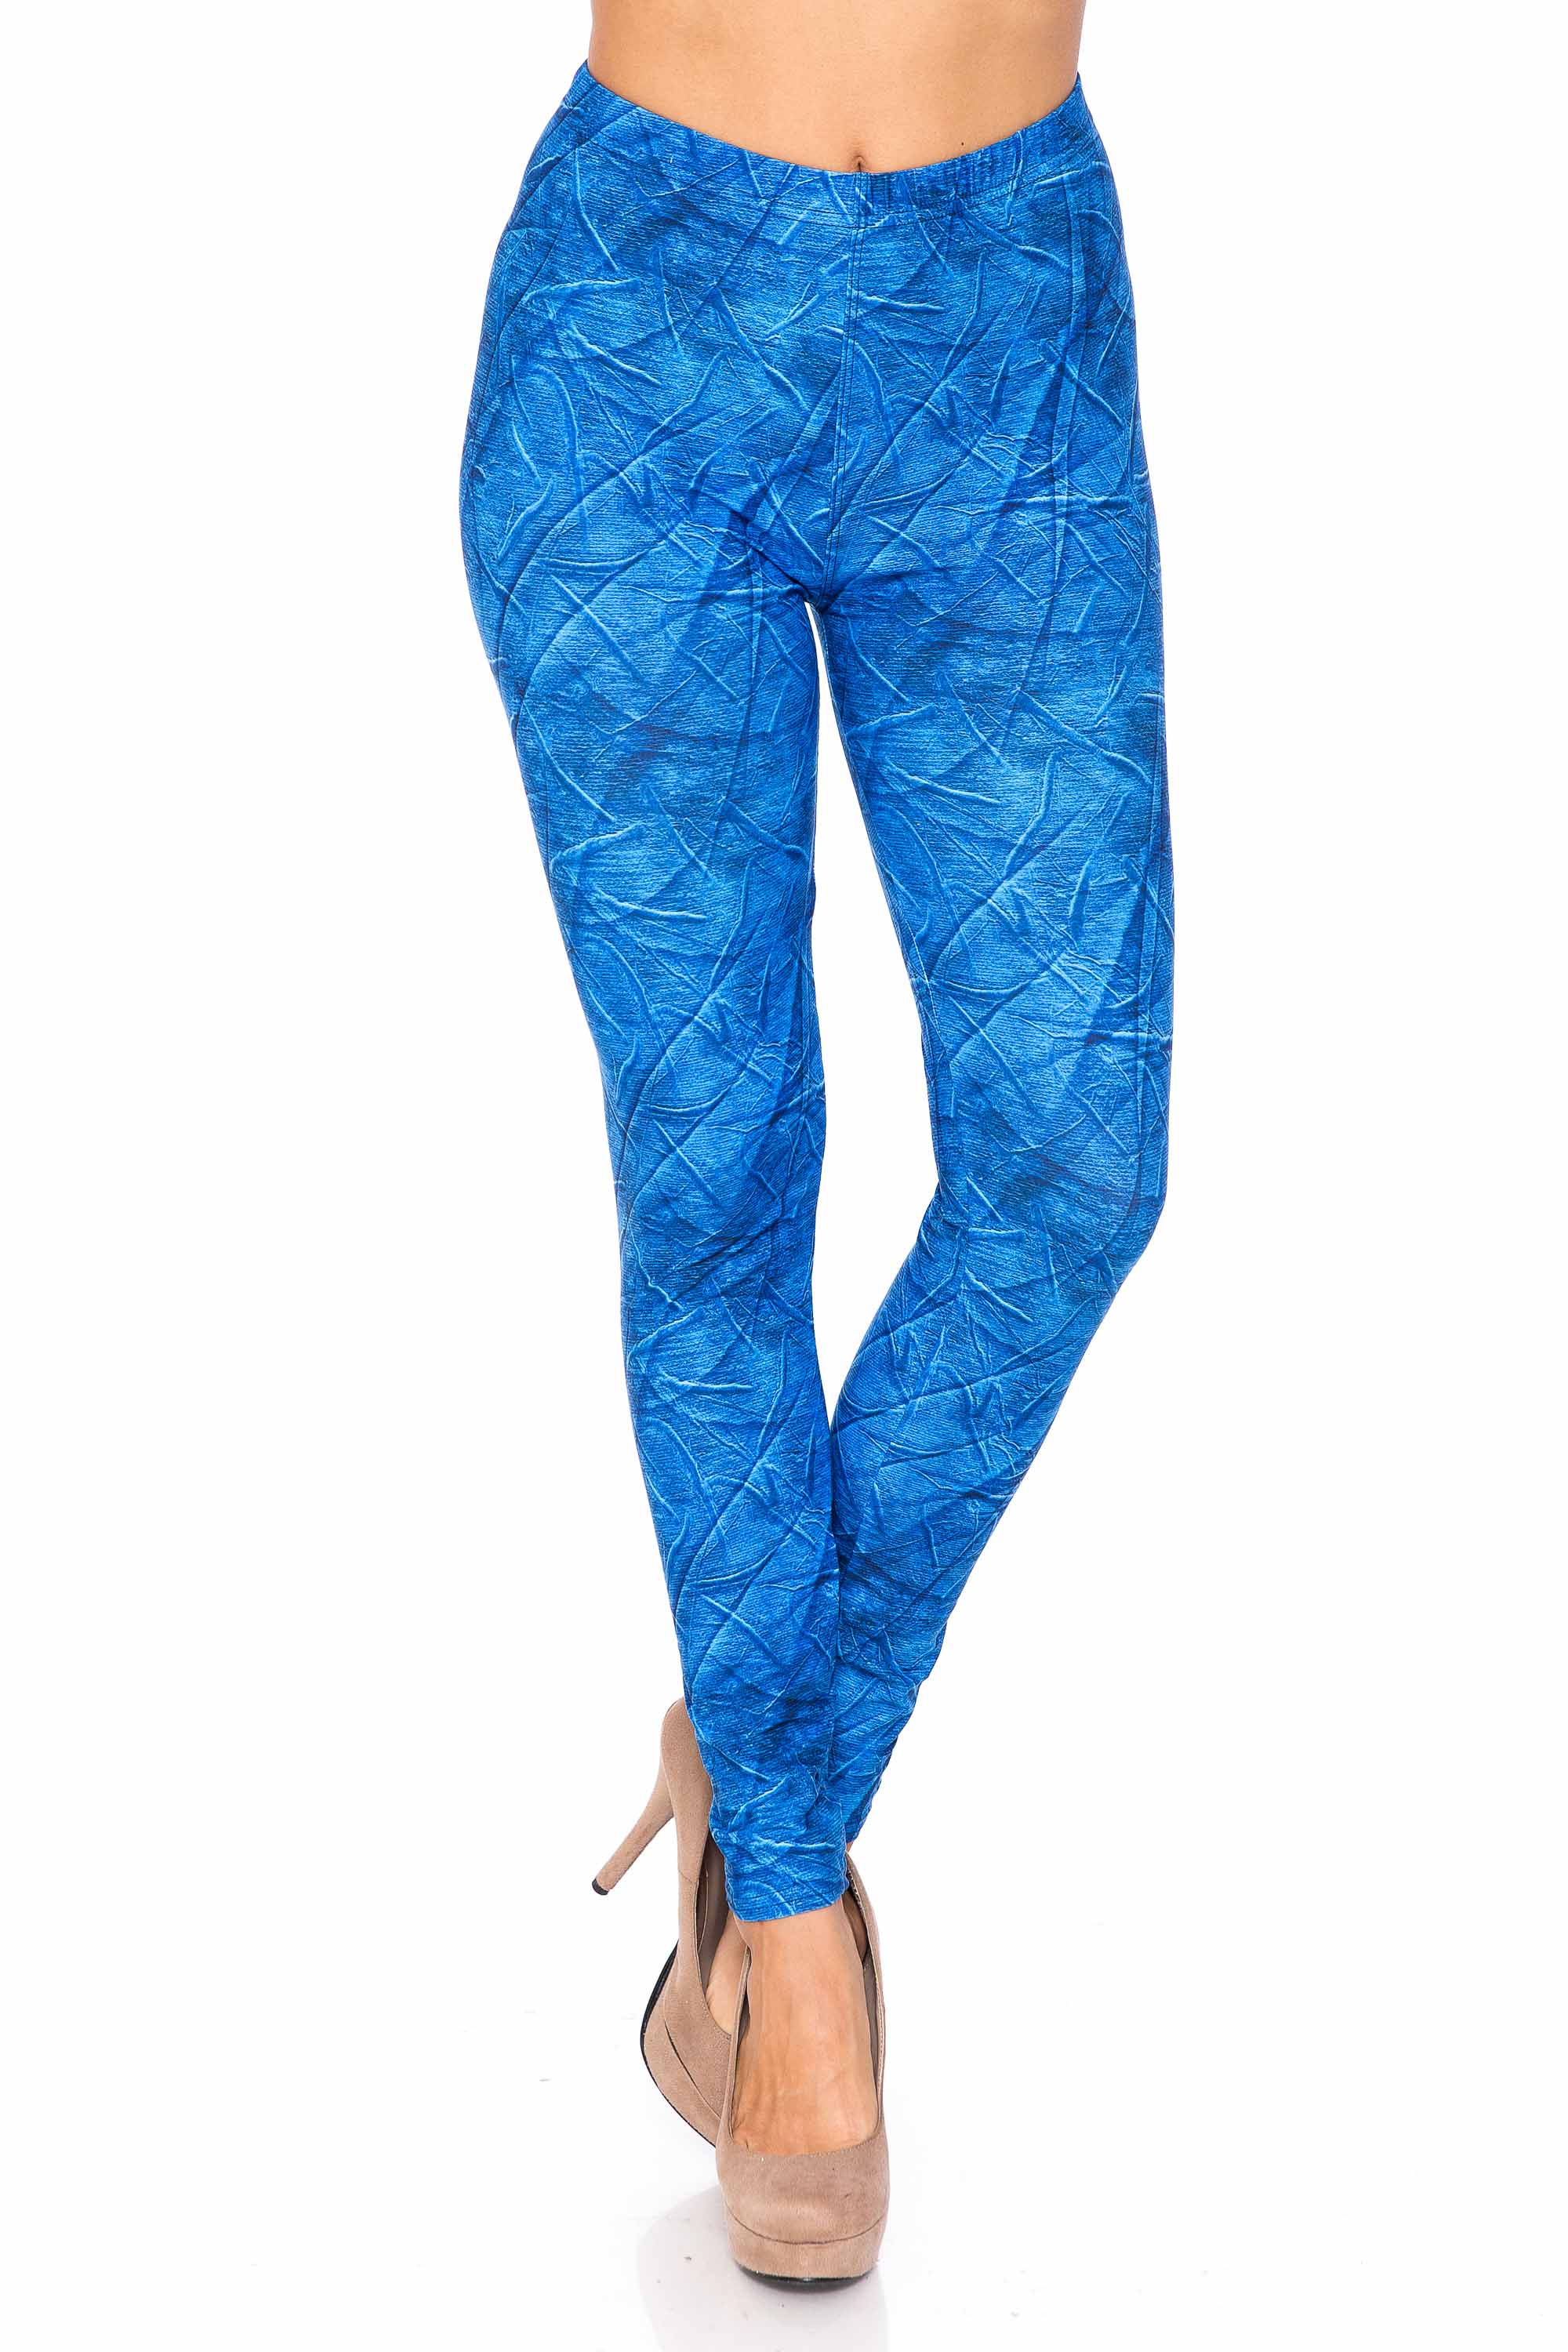 Wholesale Creamy Soft Blue Wrinkled Denim Kids Leggings - USA Fashion™